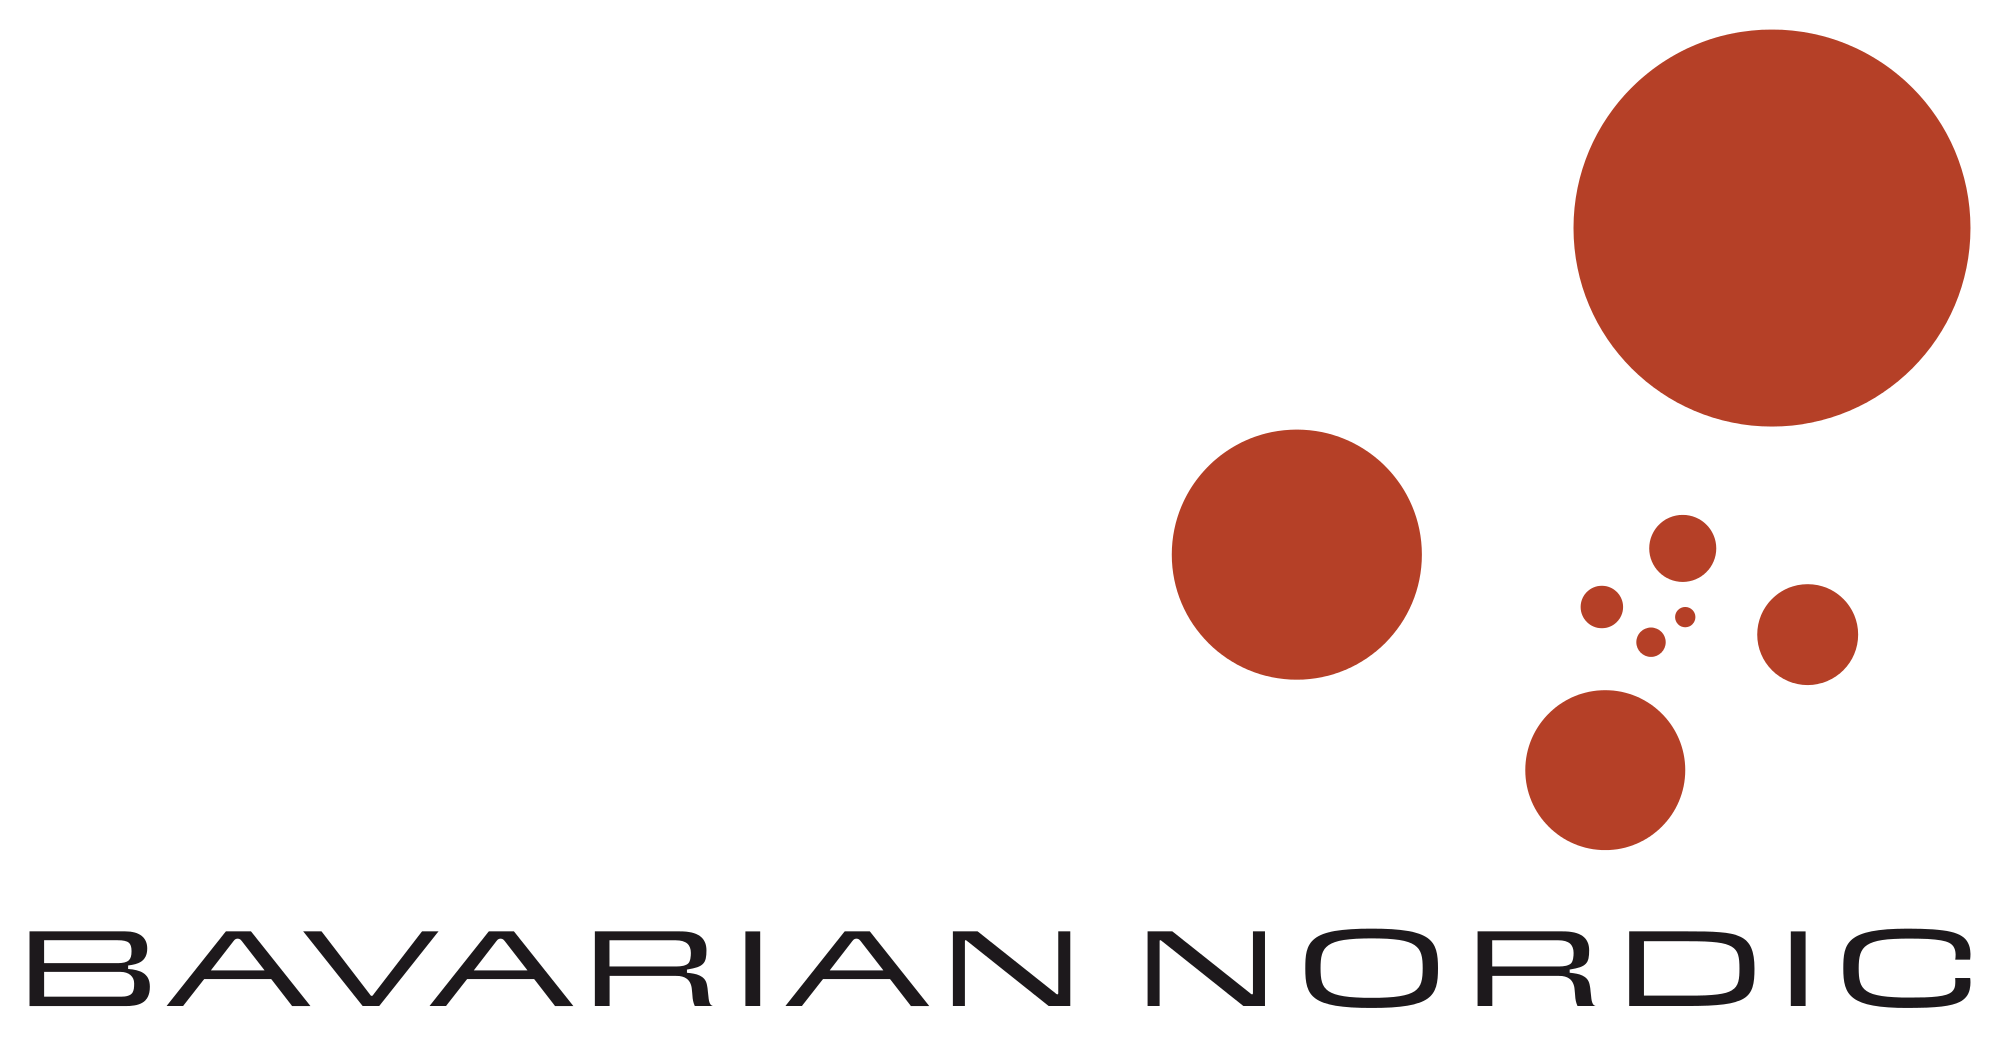 Bavarian_Nordic_logo.svg